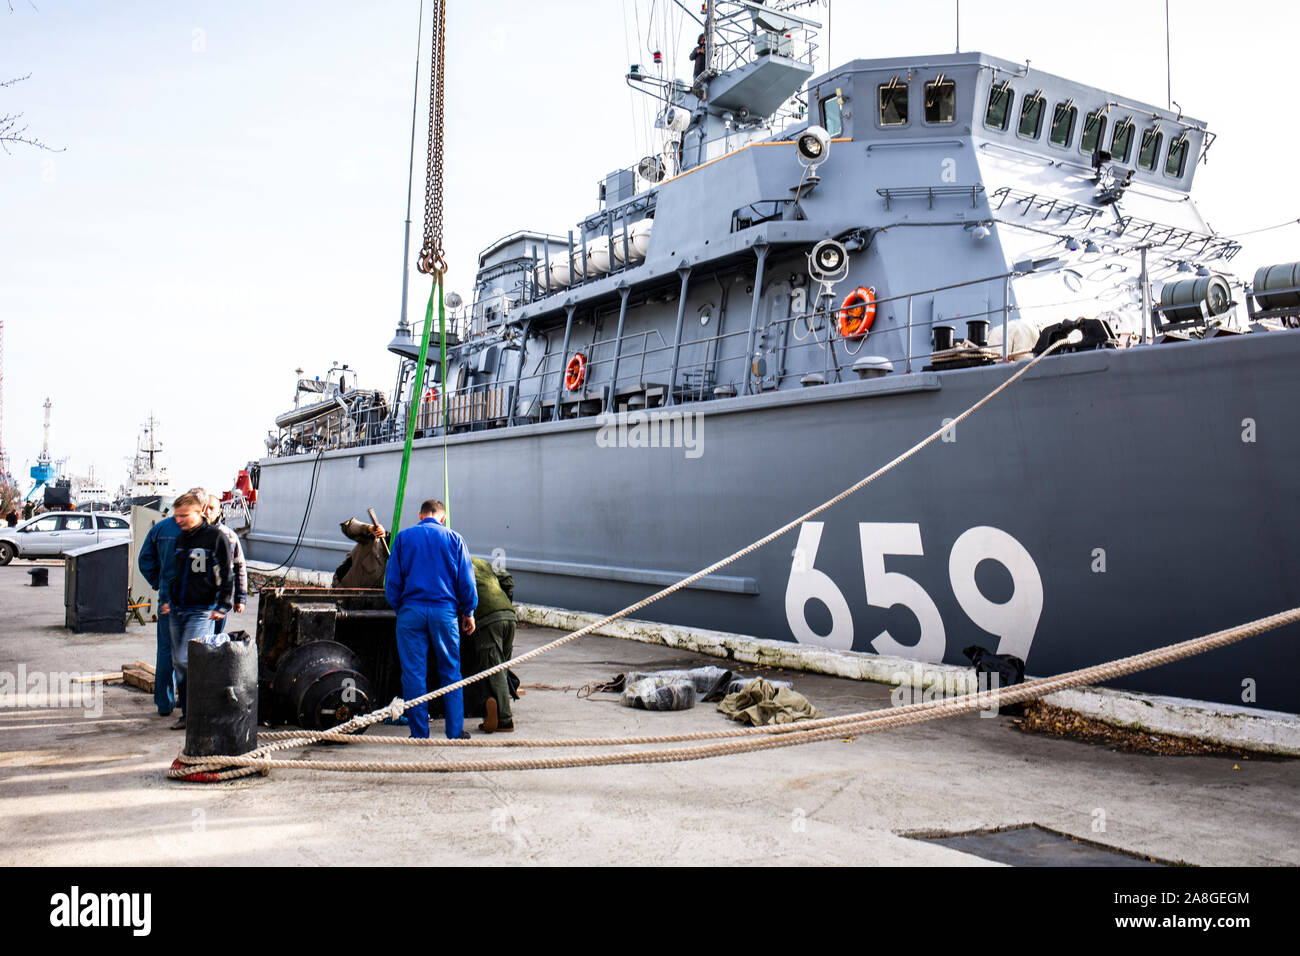 Kaliningrad warship Stock Photo